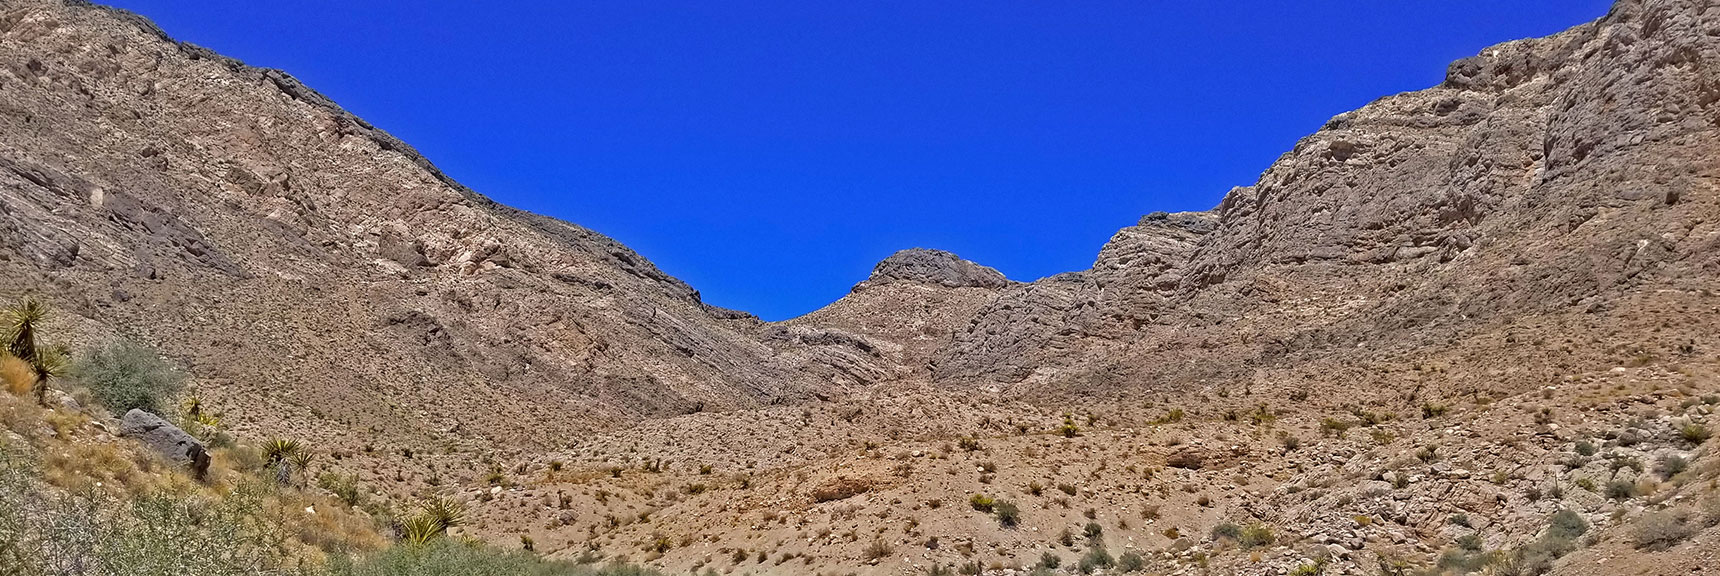 Return to Scope Out Little El Padre Approach Saddle | Little La Madre Mt, Little El Padre Mt, Little Burnt Peak | Near La Madre Mountains Wilderness, Nevada